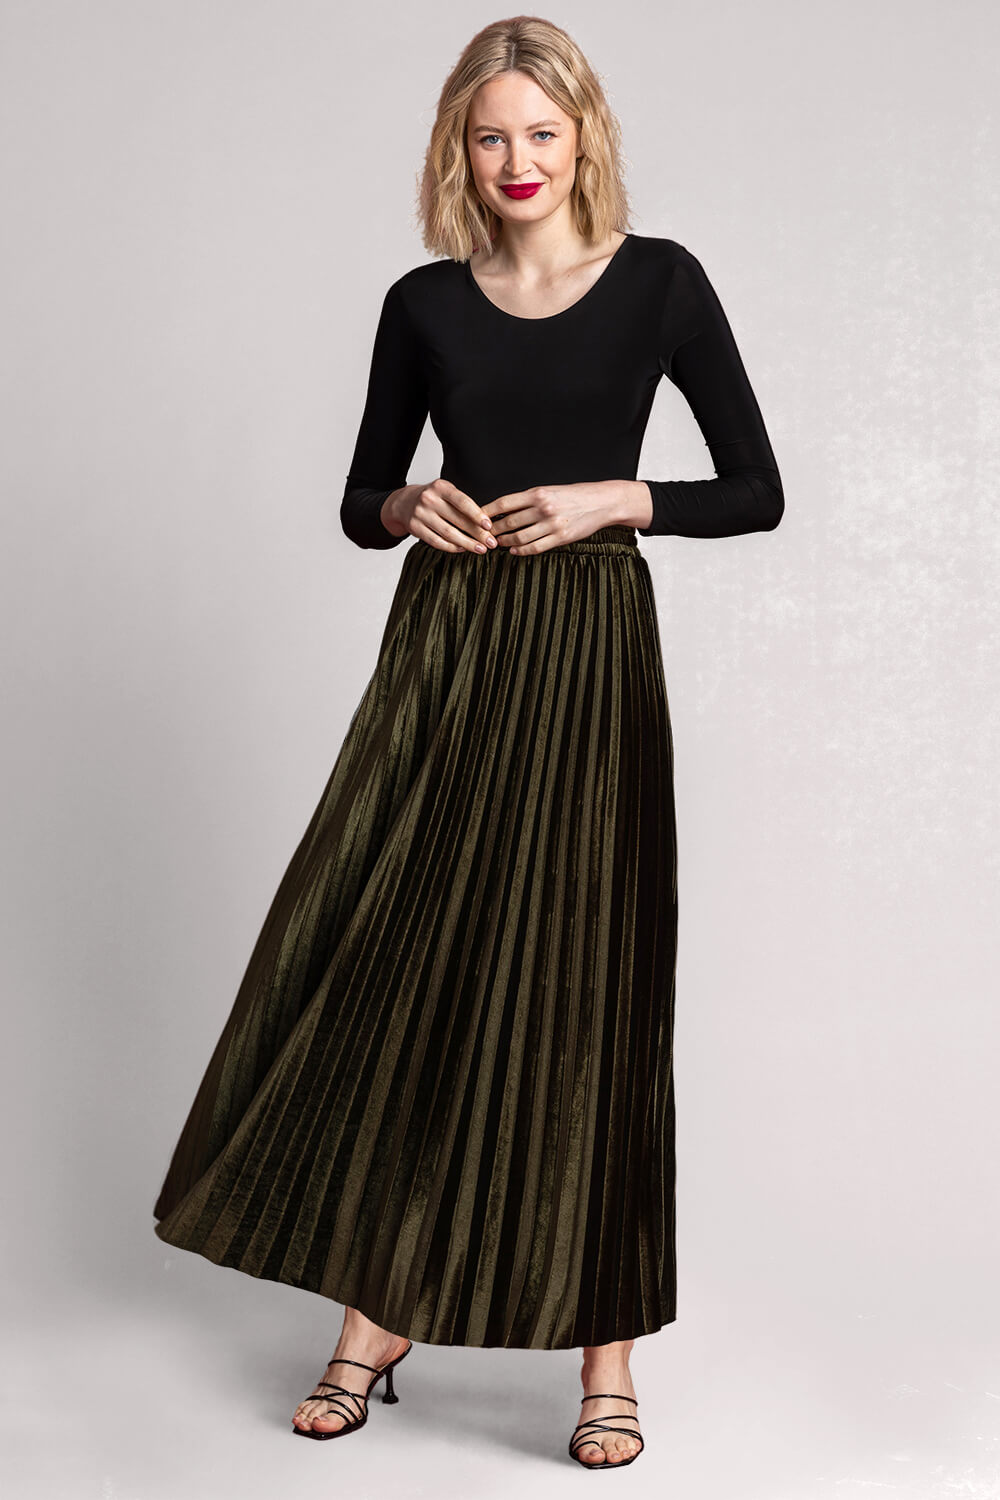 Velour Pleated Midi Skirt in Olive - Roman Originals UK